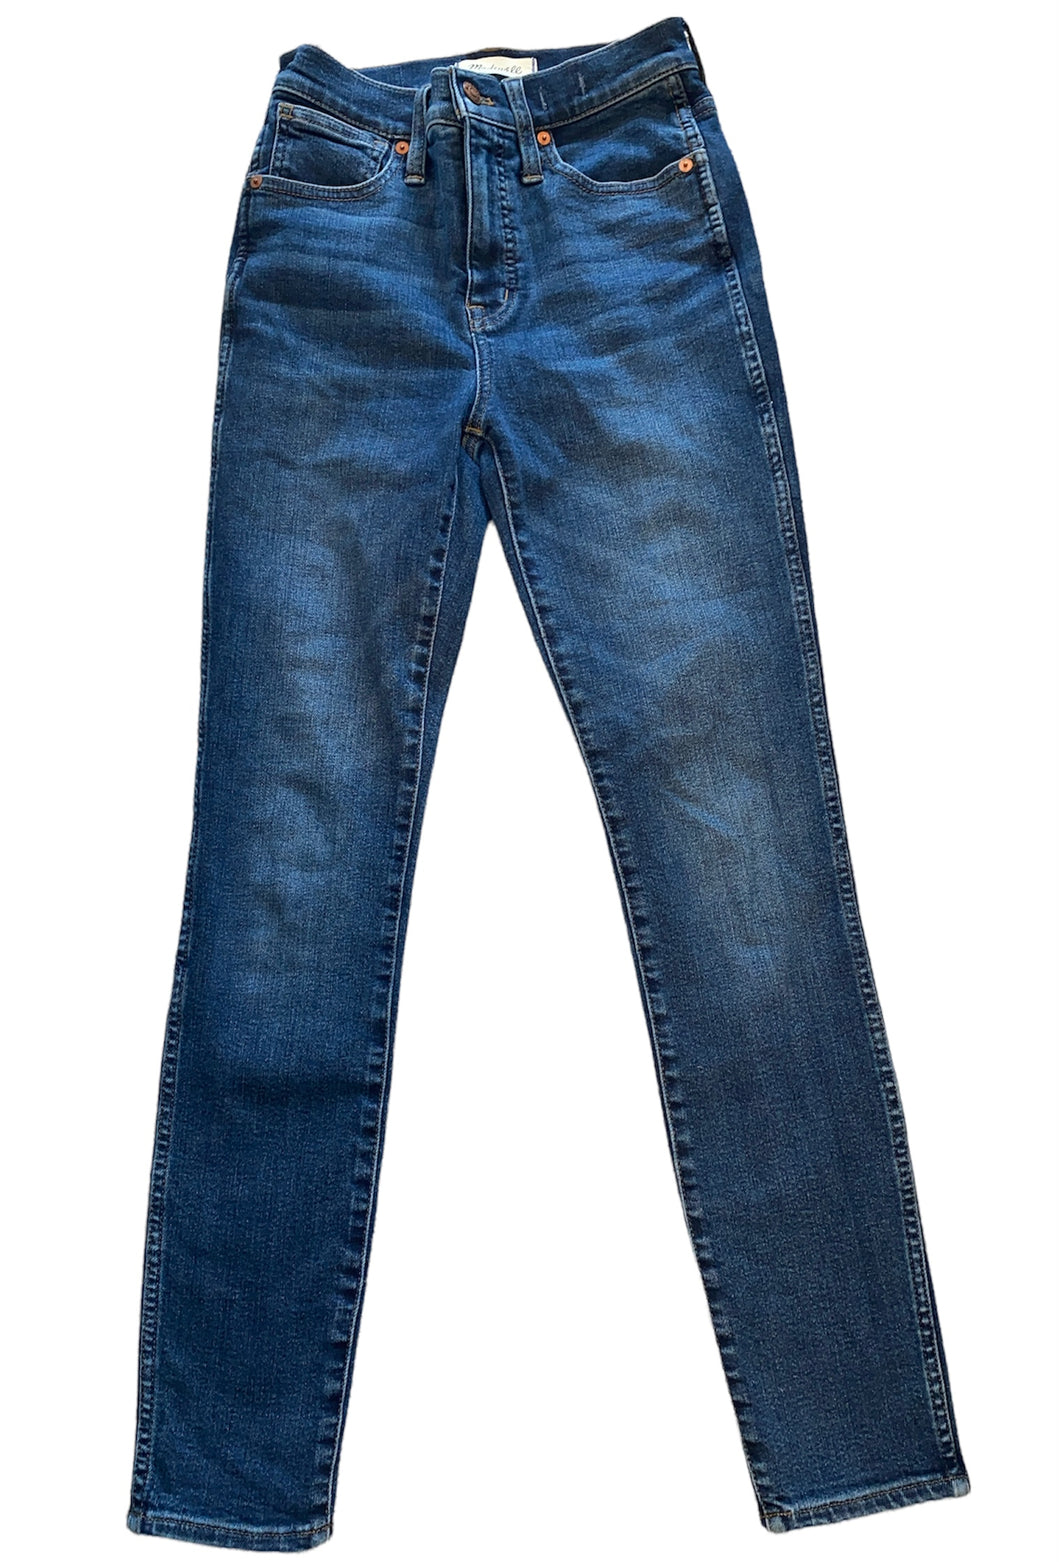 Madewell Women’s 10” high rise skinny jeans 24